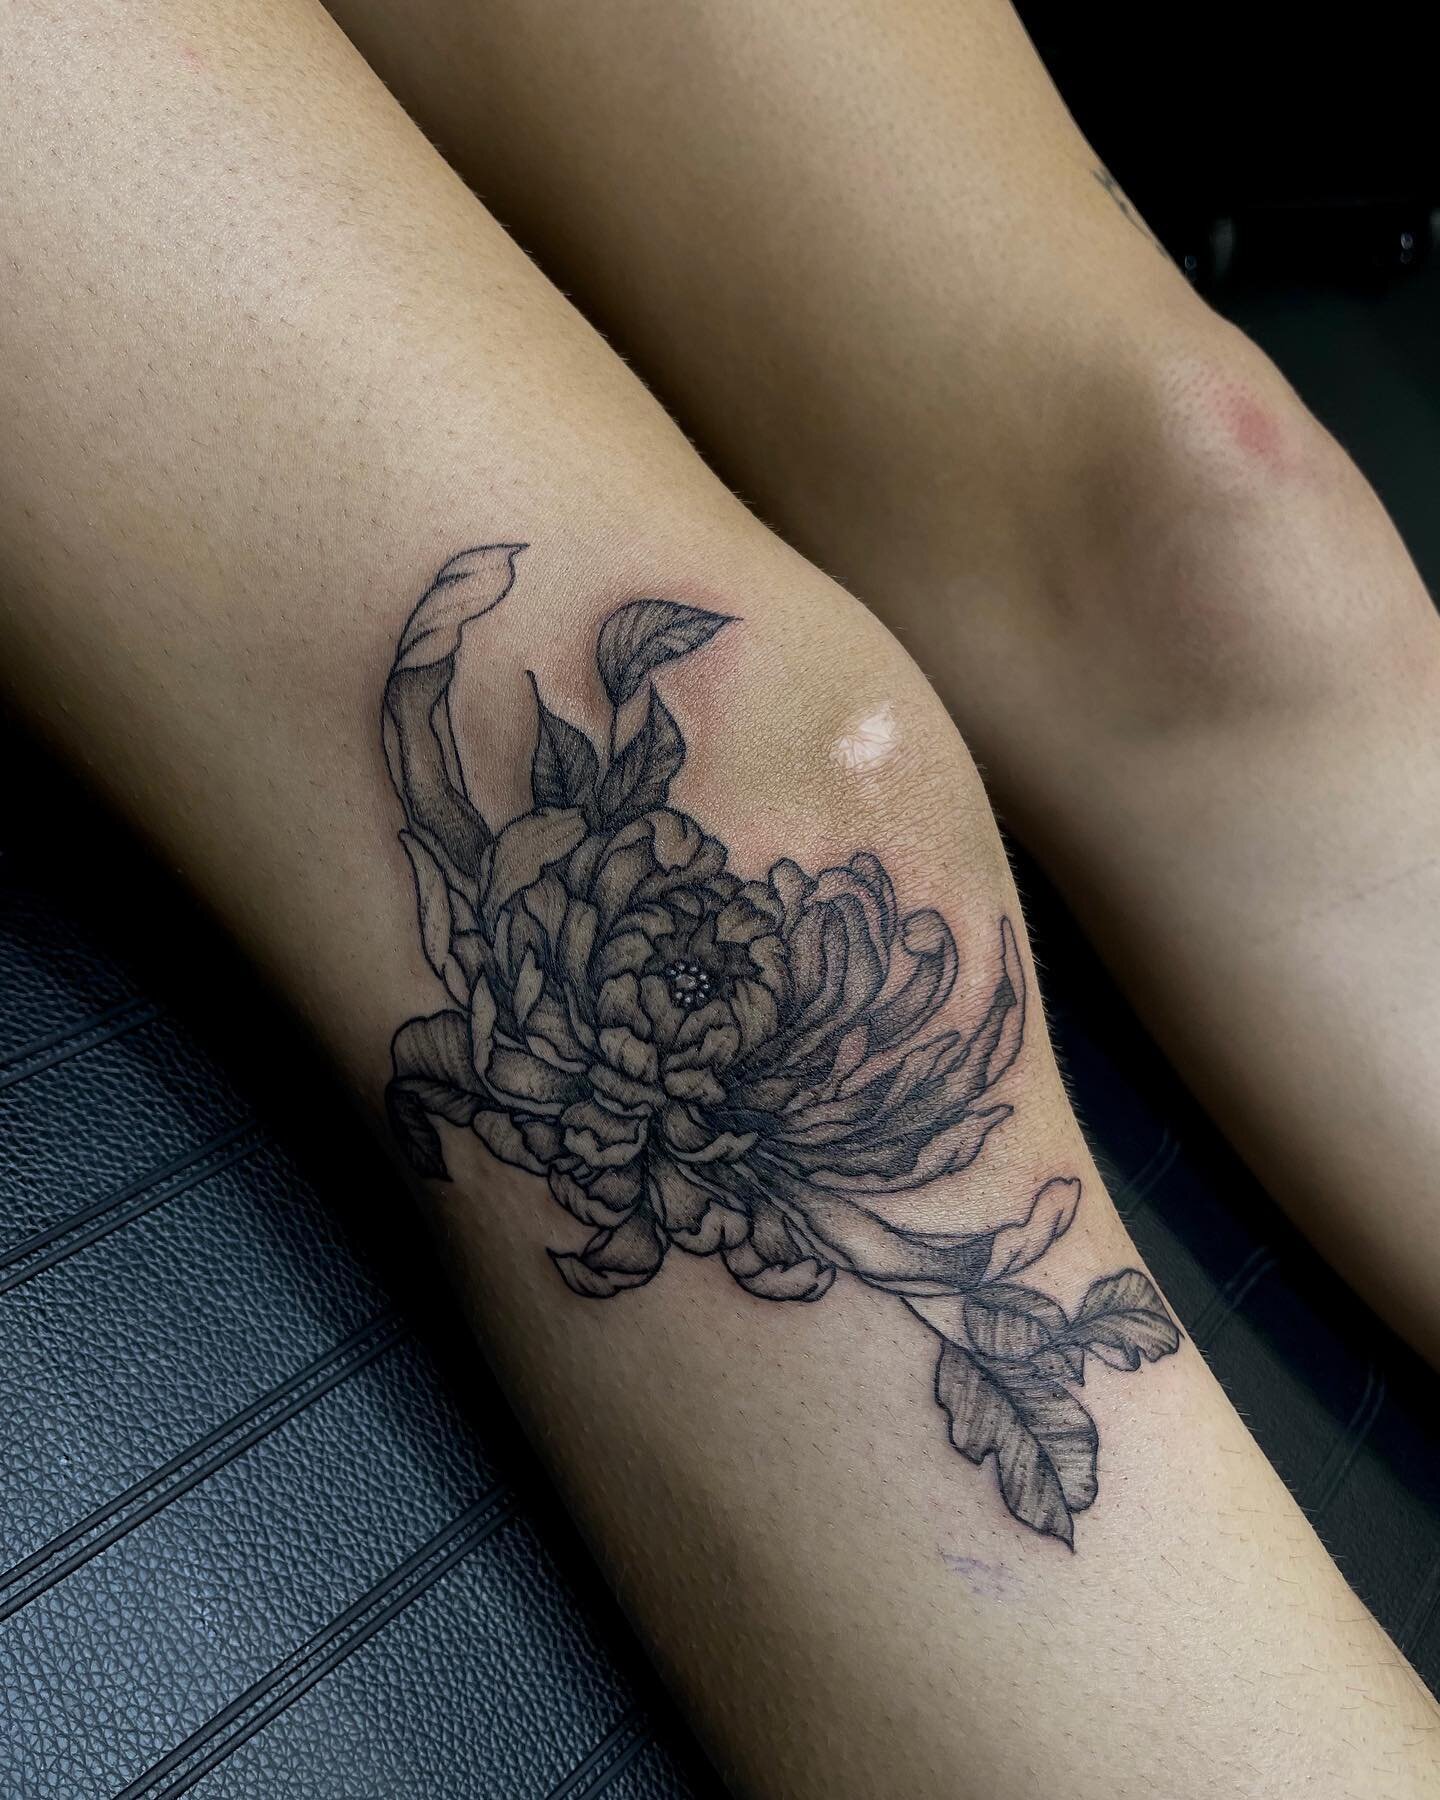 chrysanthemum ✨

thank you sm @klaraa.maeee 

#tattoos #tattoo #tattooartist #bodyart #customtattoo #besttattoos #tattoolife #instatattoo #tattooaddict&nbsp; #besttattoo&nbsp; #yegtattoo #awesometattoos&nbsp; #colortattoo #blackandgraytattoo #yegarti